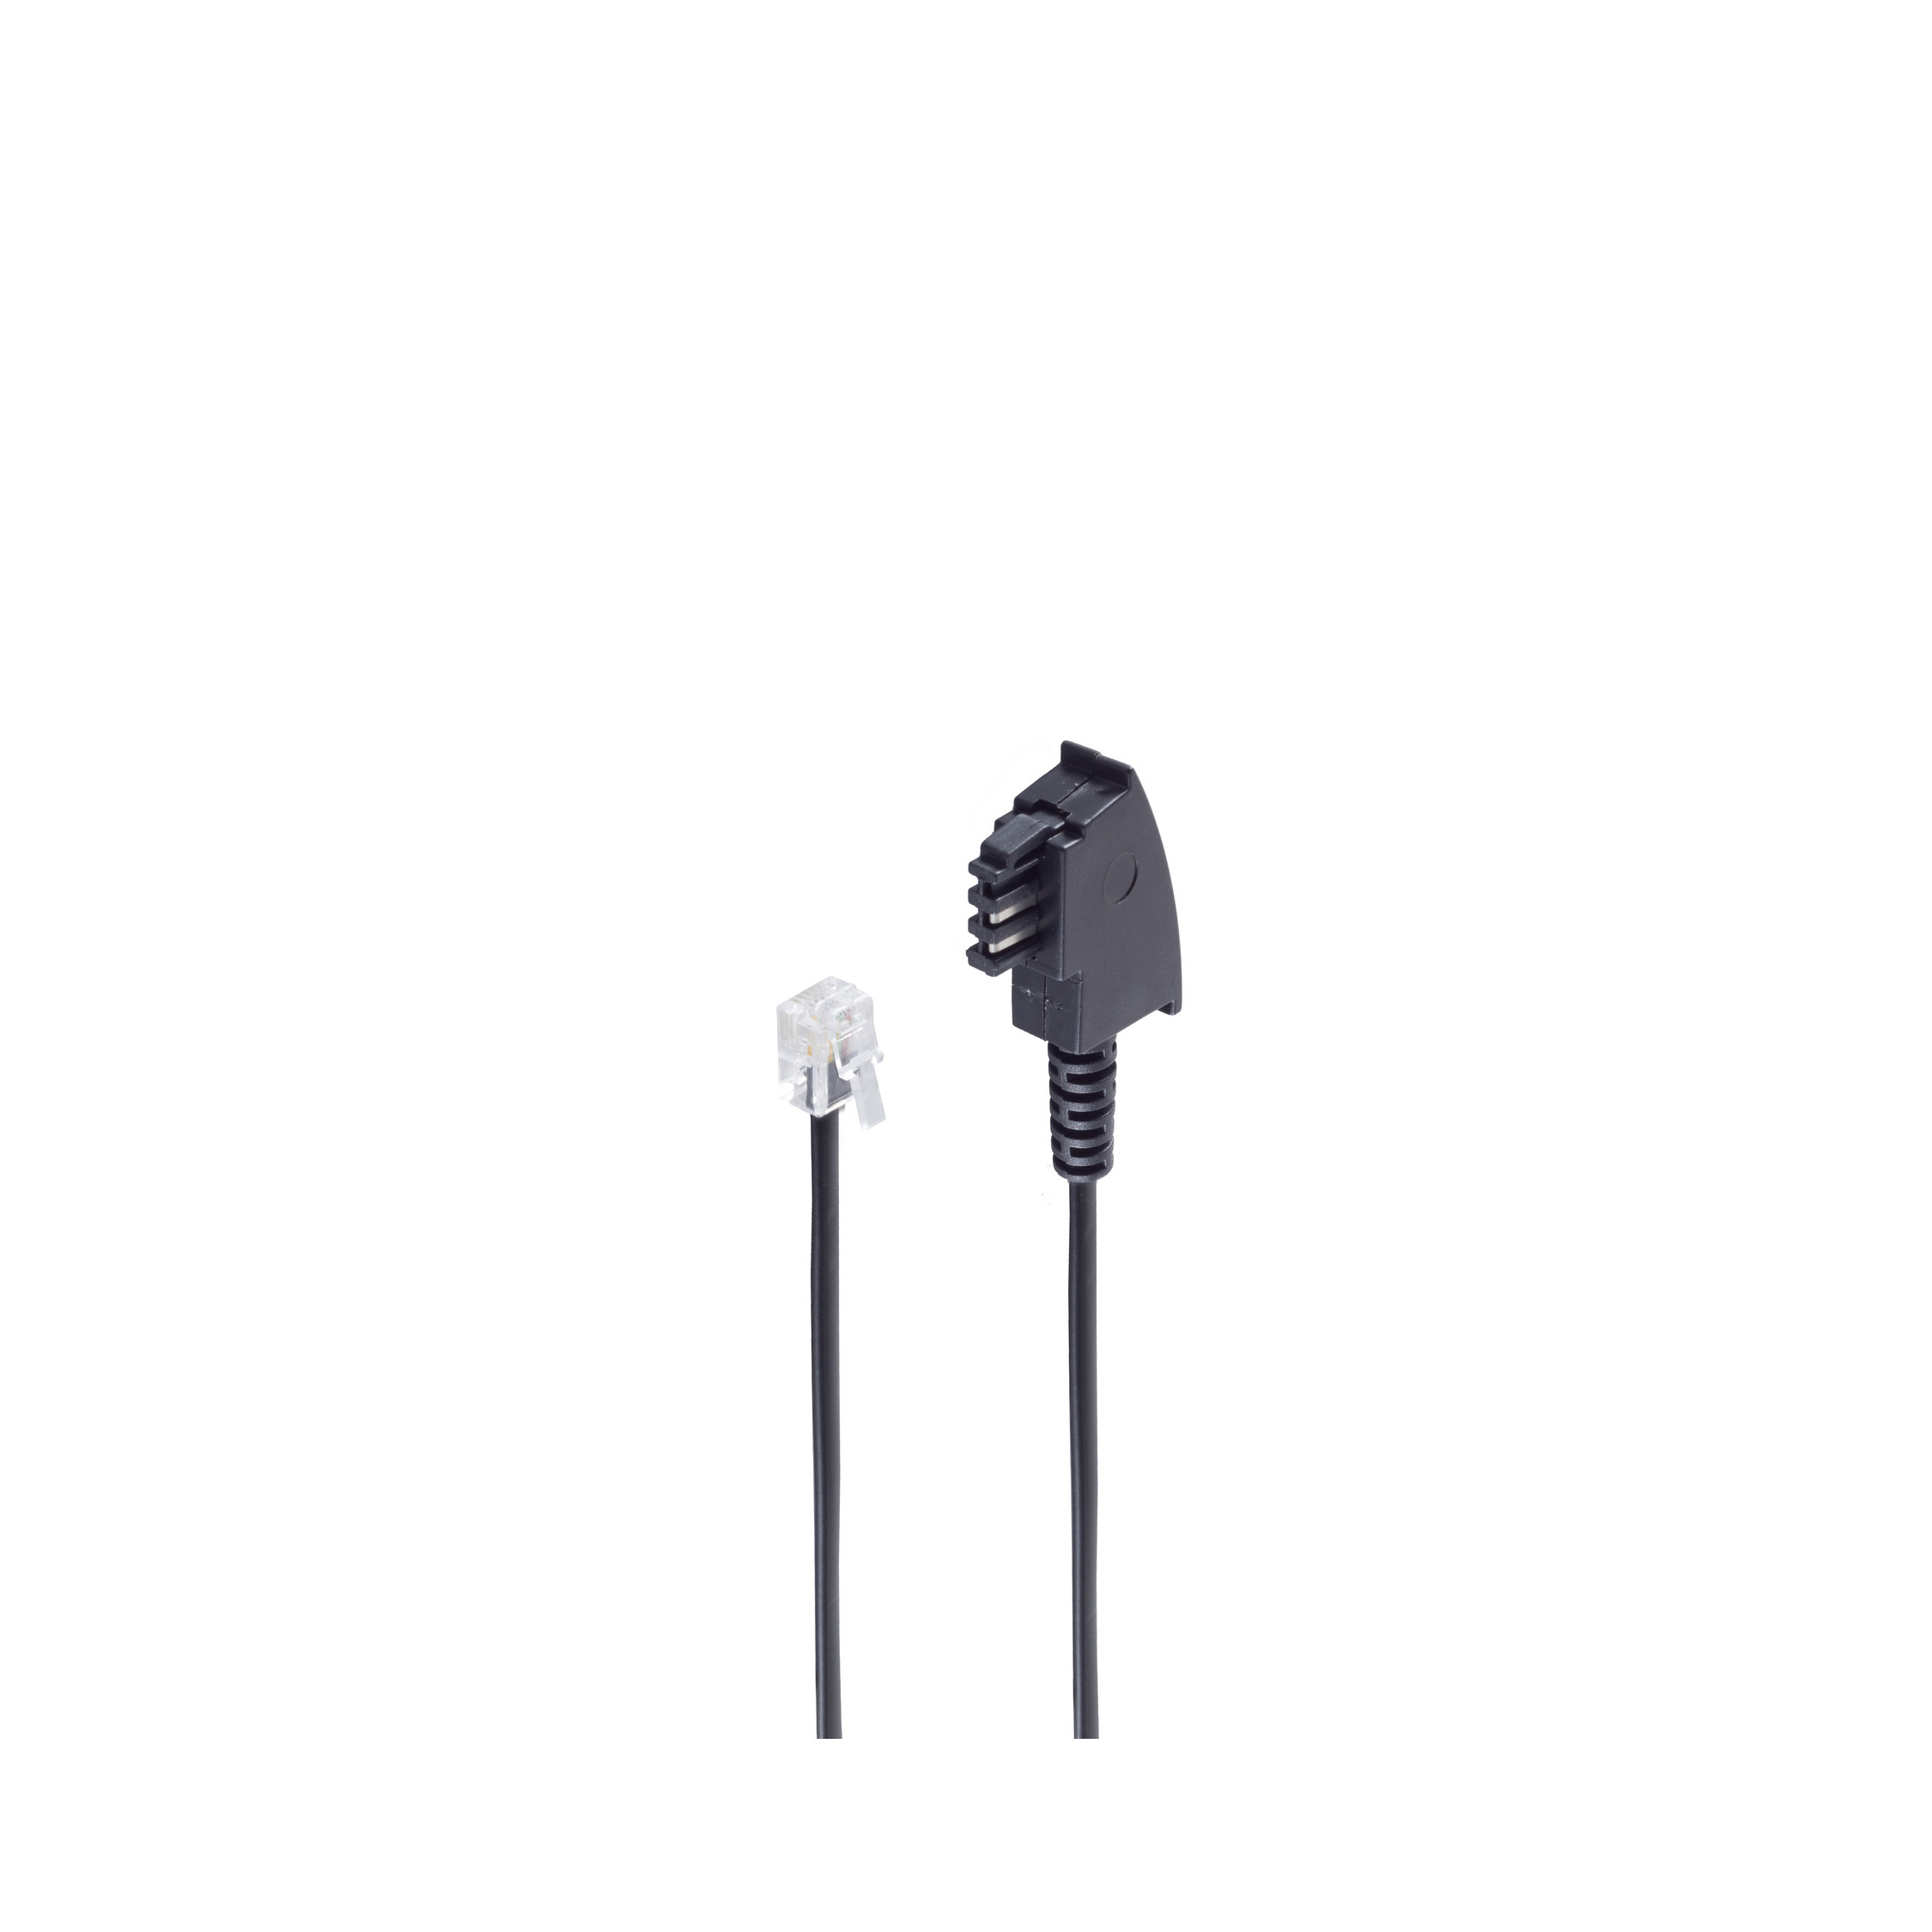 Kabel TAE 6m Western-Stecker ISDN TAE schwarz SHIVERPEAKS Universal / F-Stecker 6/4